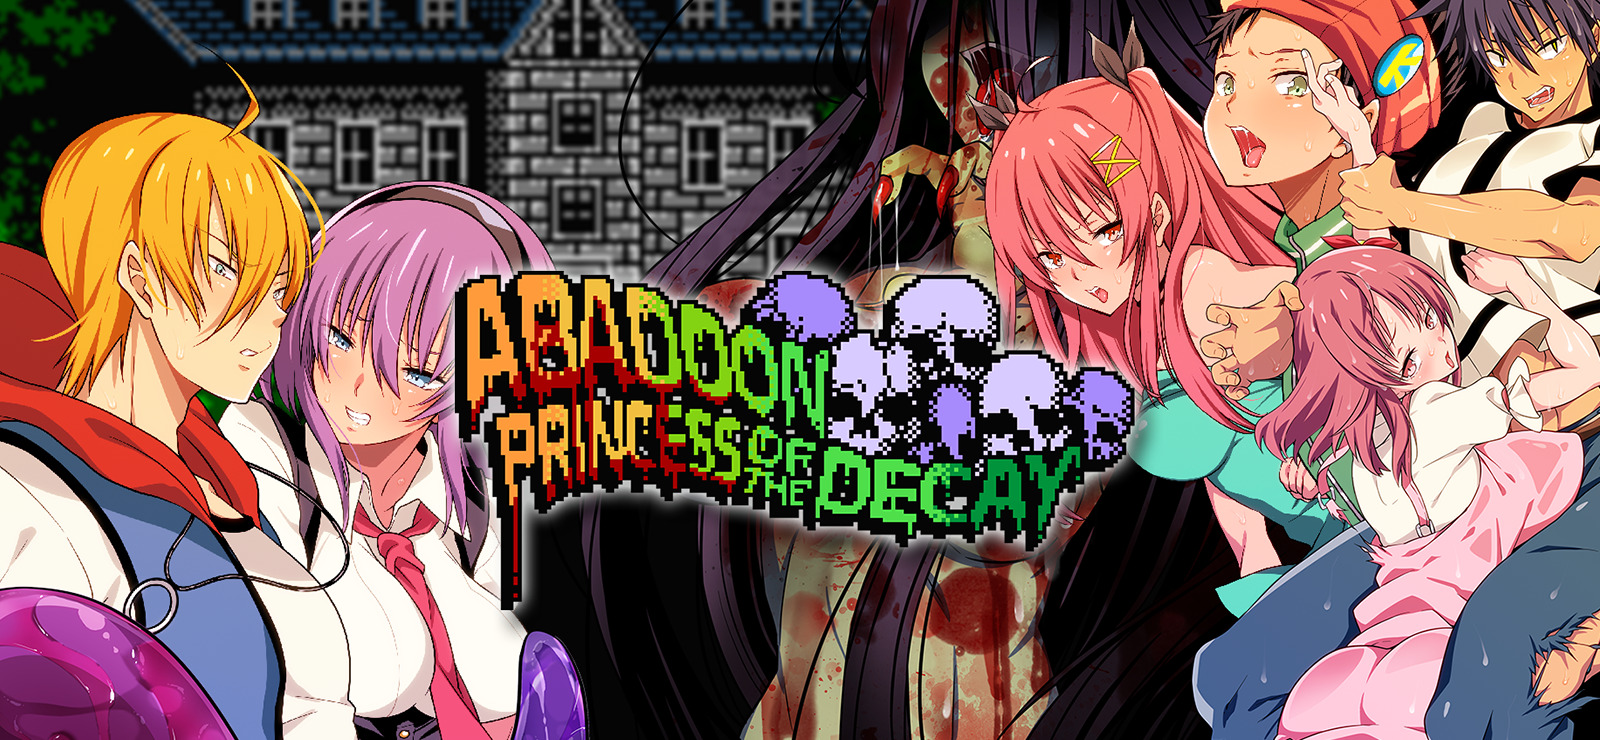 Abaddon princess of the decay